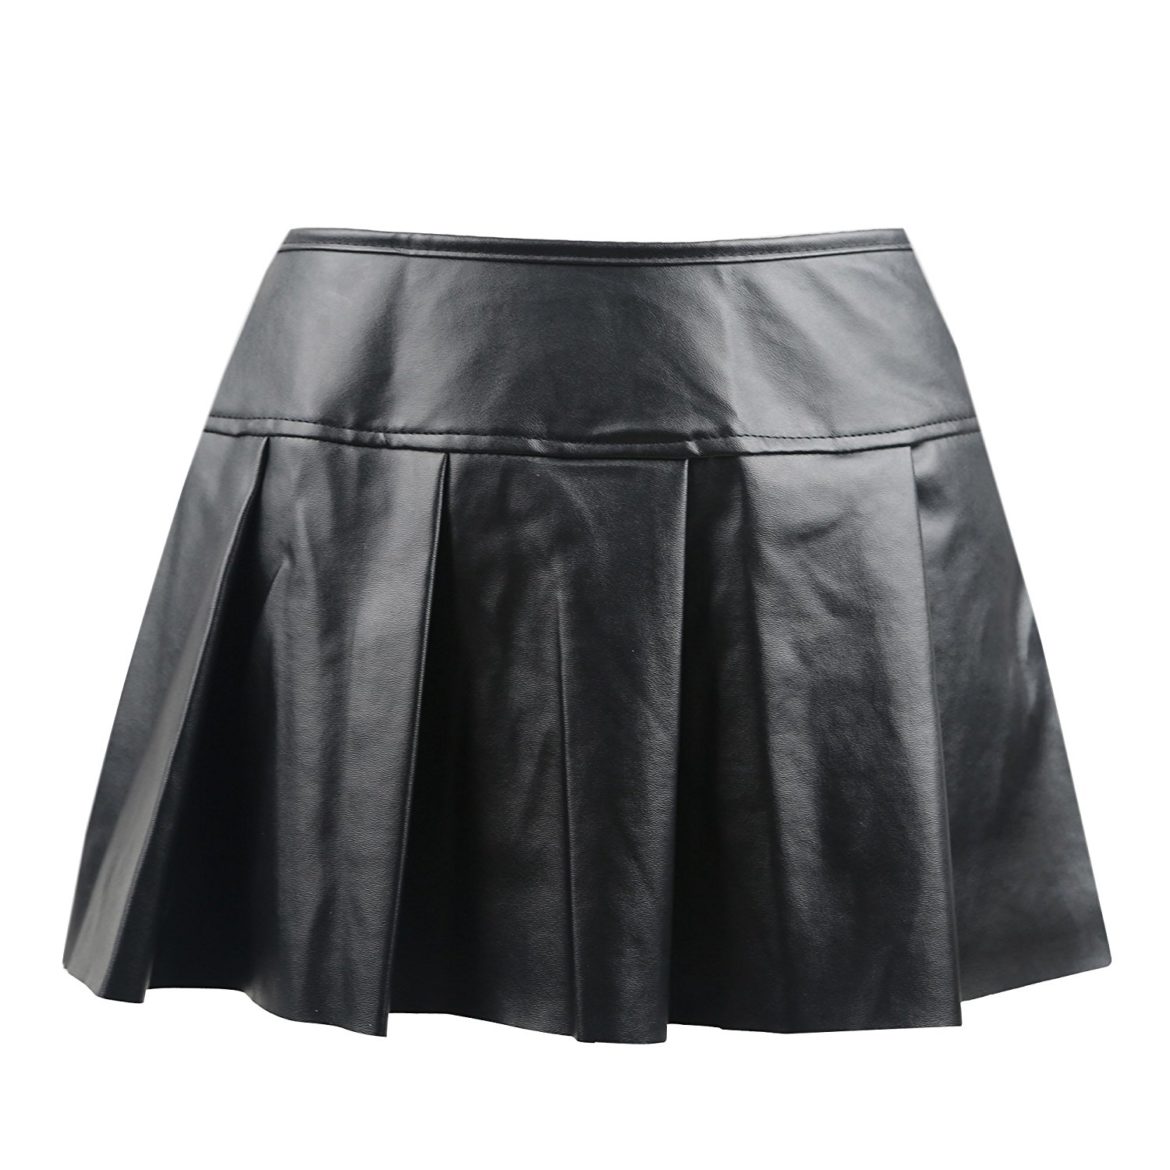 Killreal Women’s Punk Rock Faux Leather Bodycon Short Skirt ...